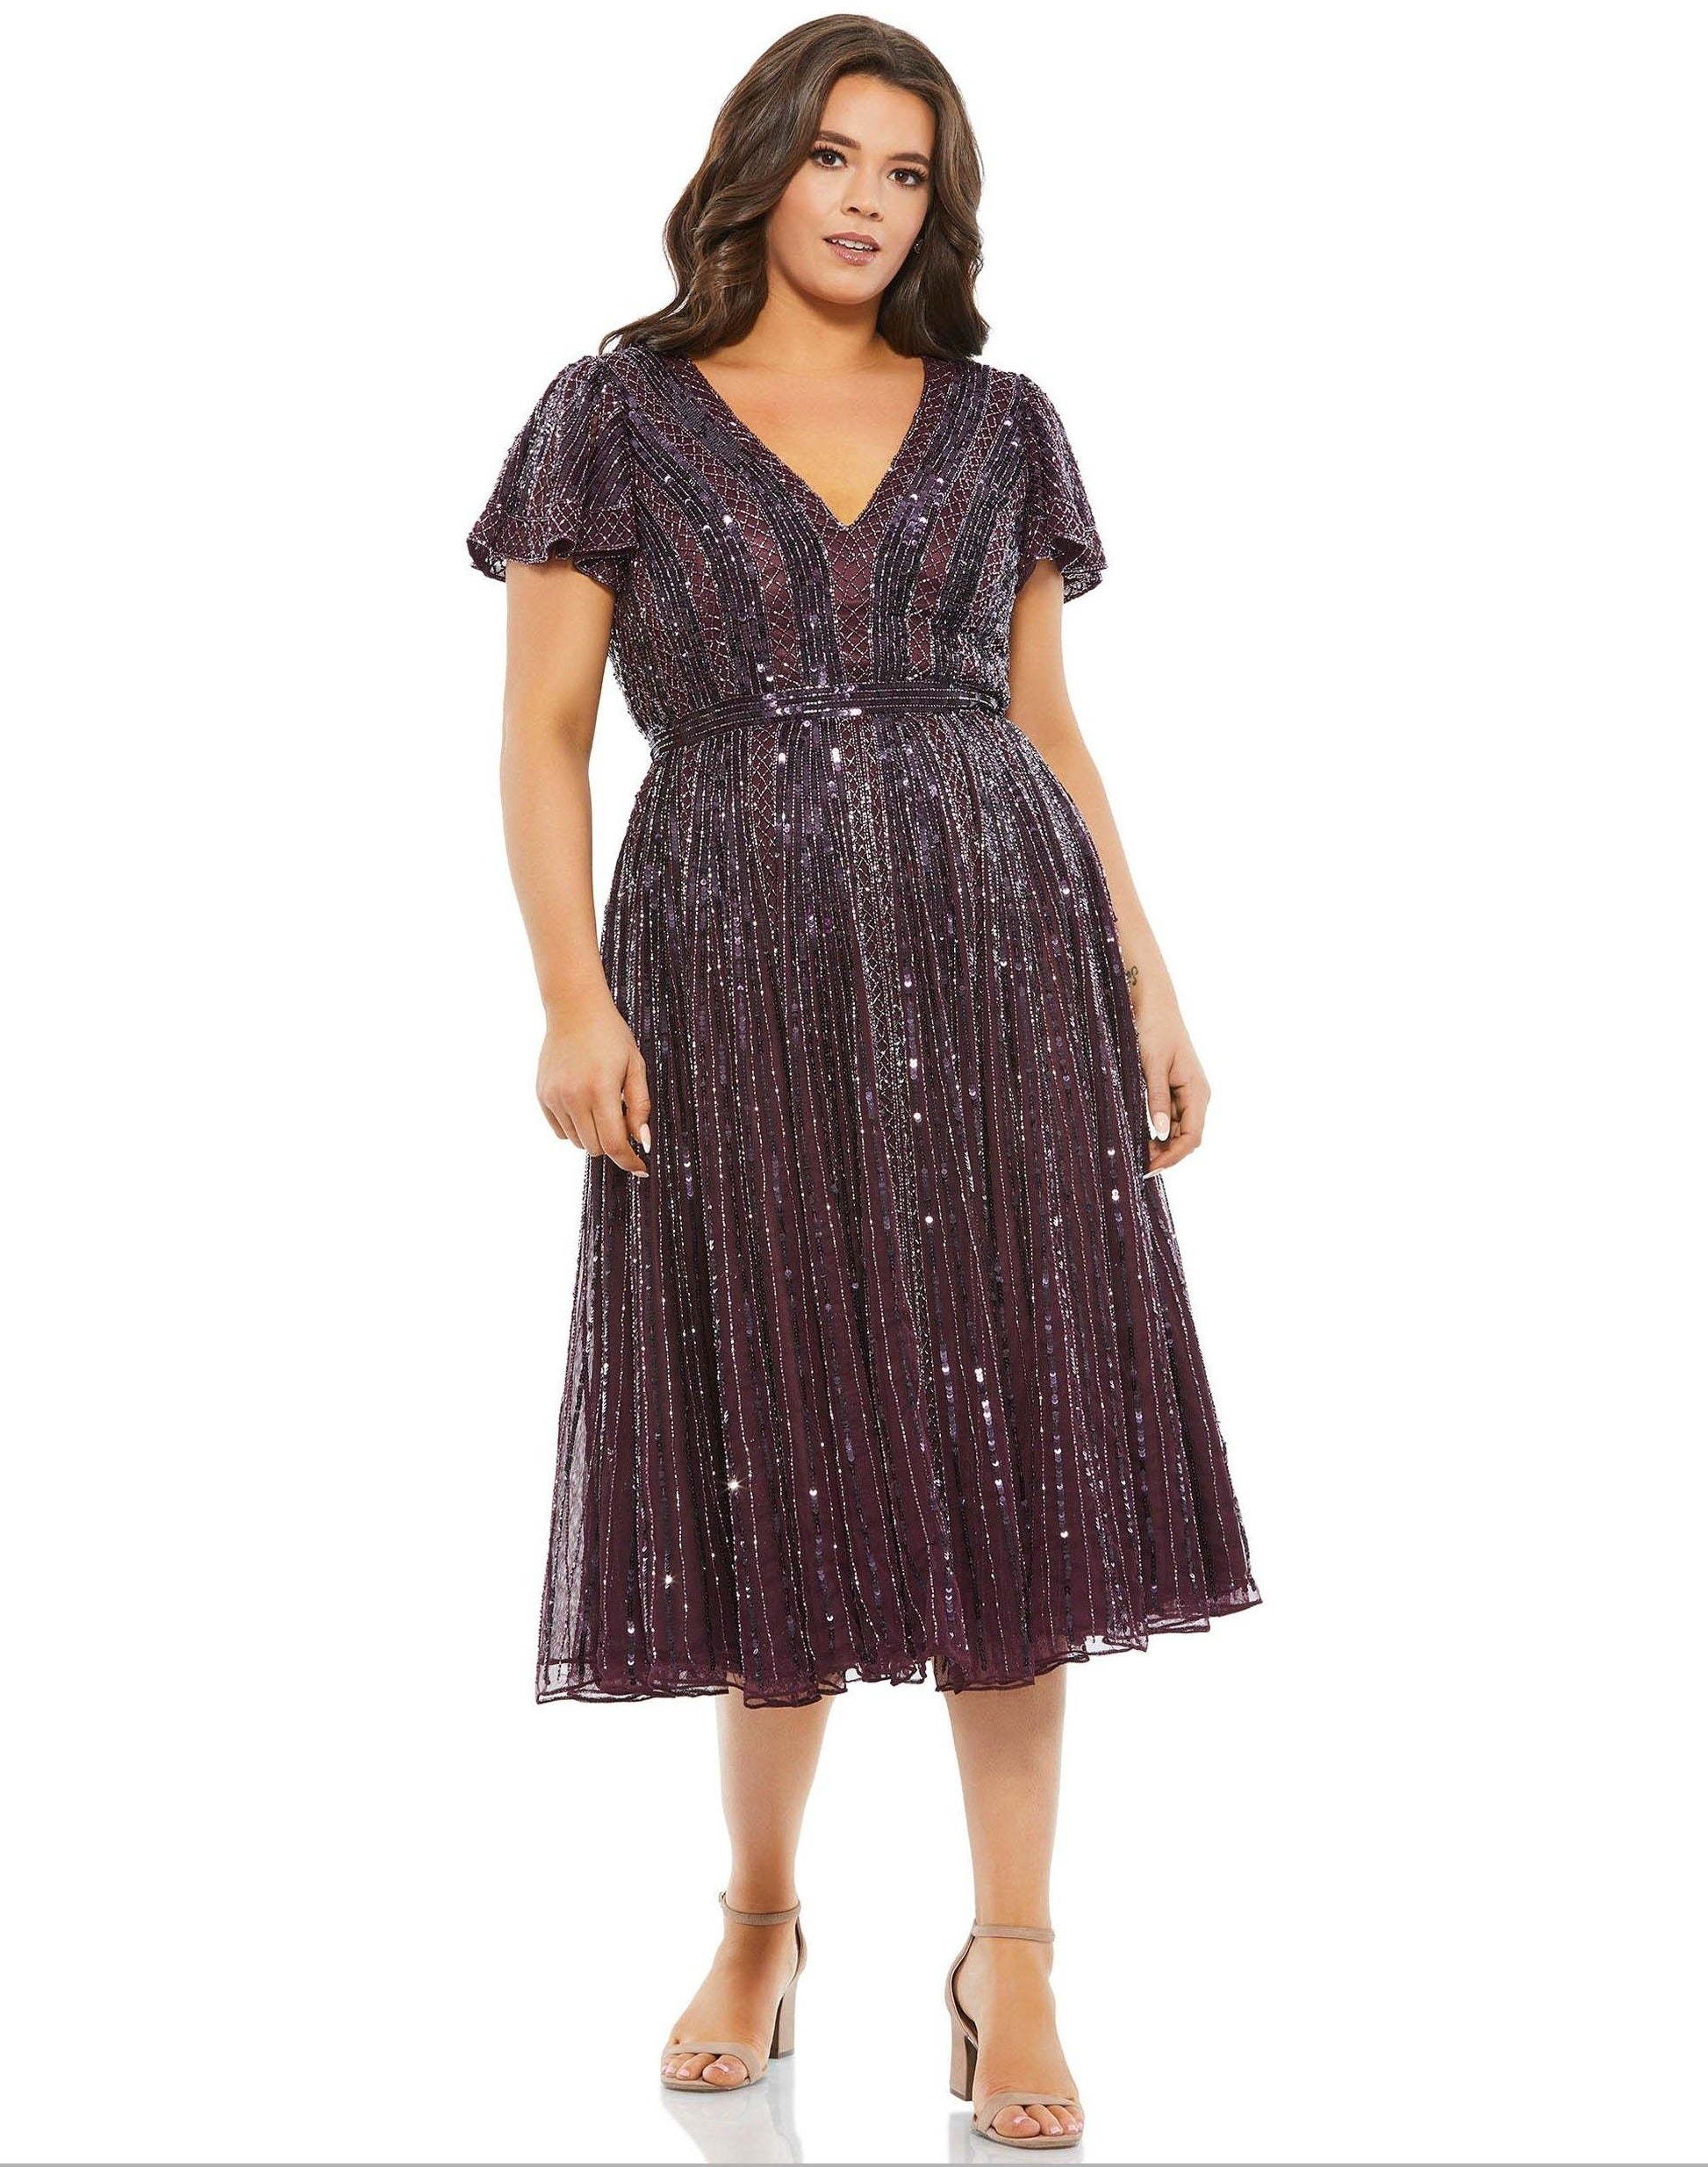 Mac Duggal Fabulouss Short Plus Size Dress 5522 - The Dress Outlet